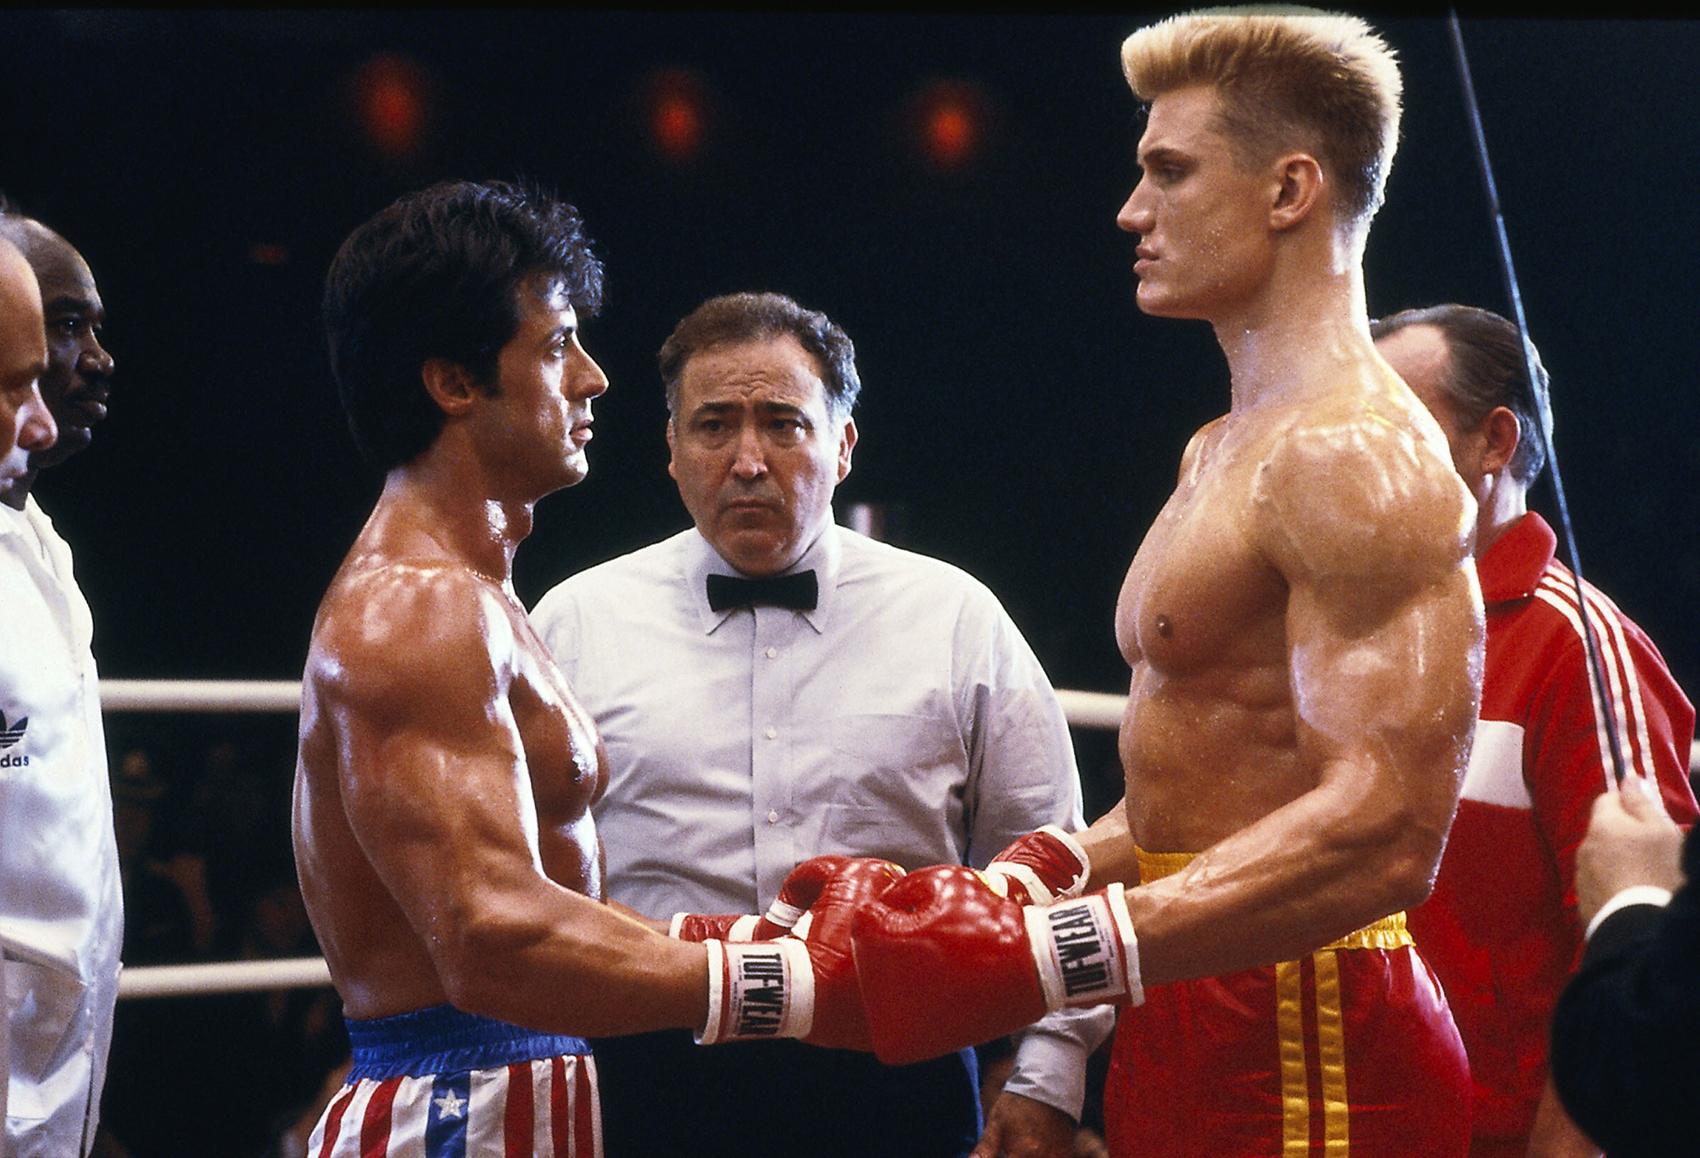 Dolph Lundgren och Sylvester Stallone i ”Rocky” 1985.